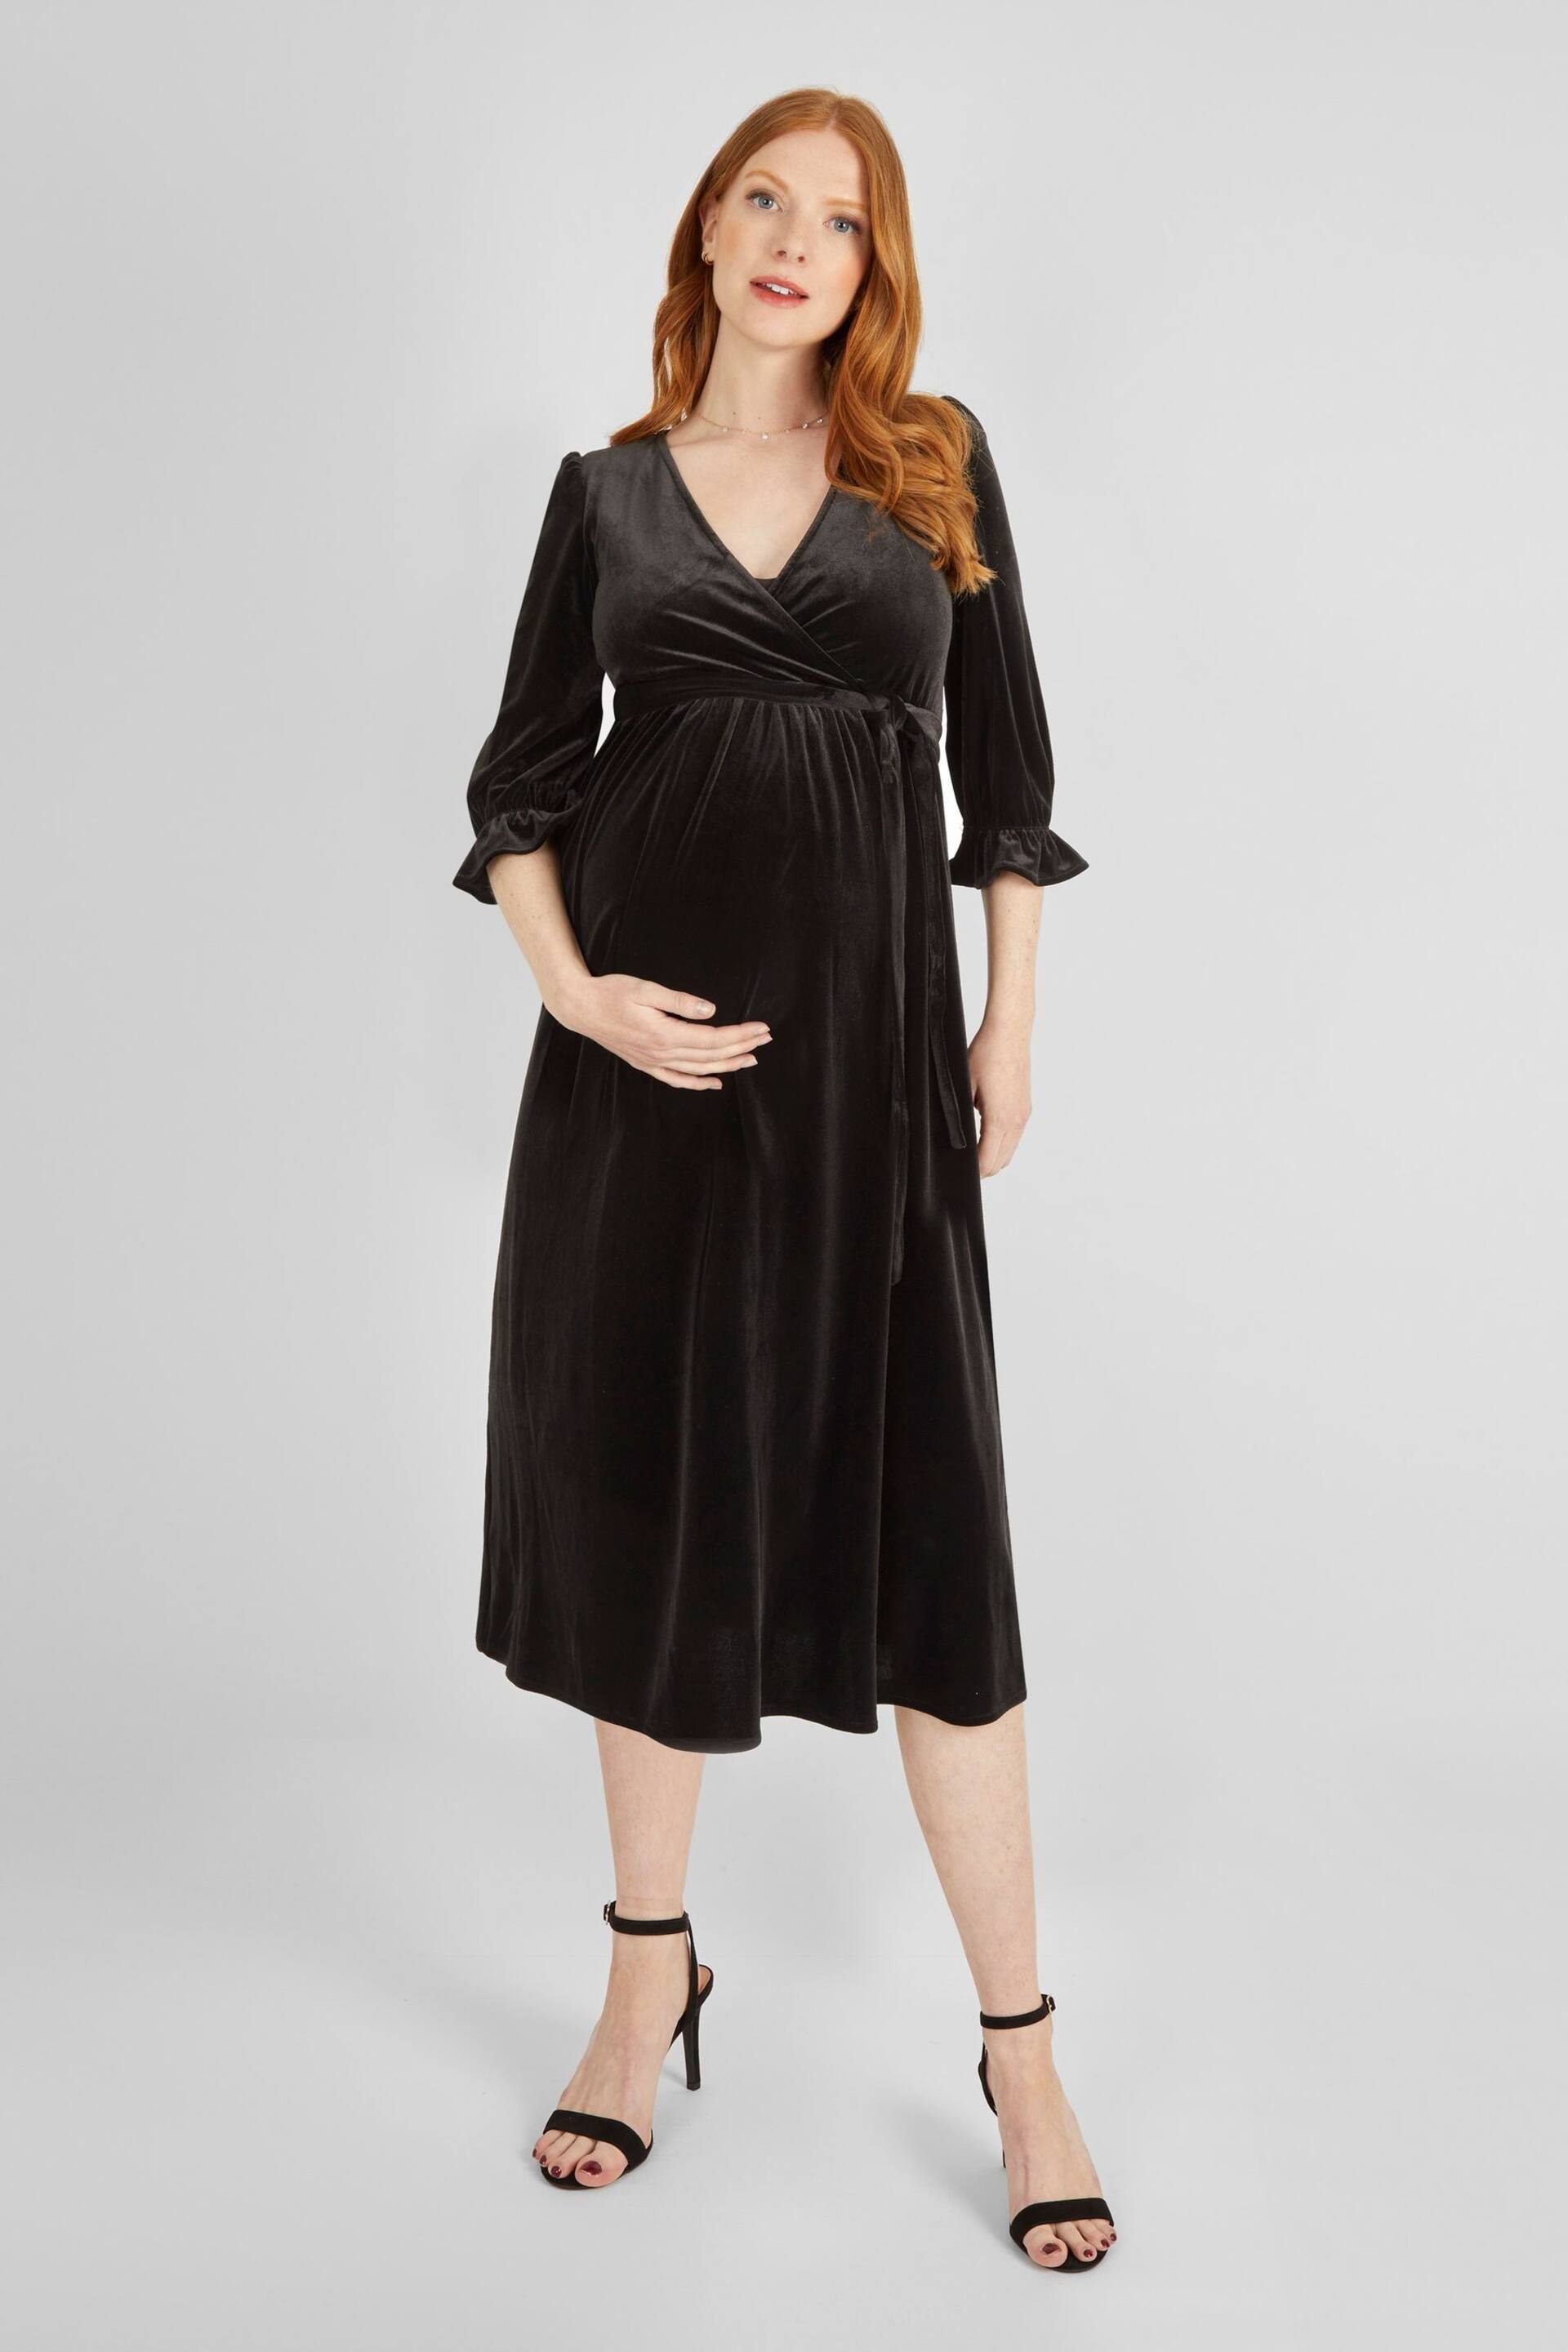 JoJo Maman Bébé Black Velvet Wrap Maternity & Nursing Dress - Image 3 of 5